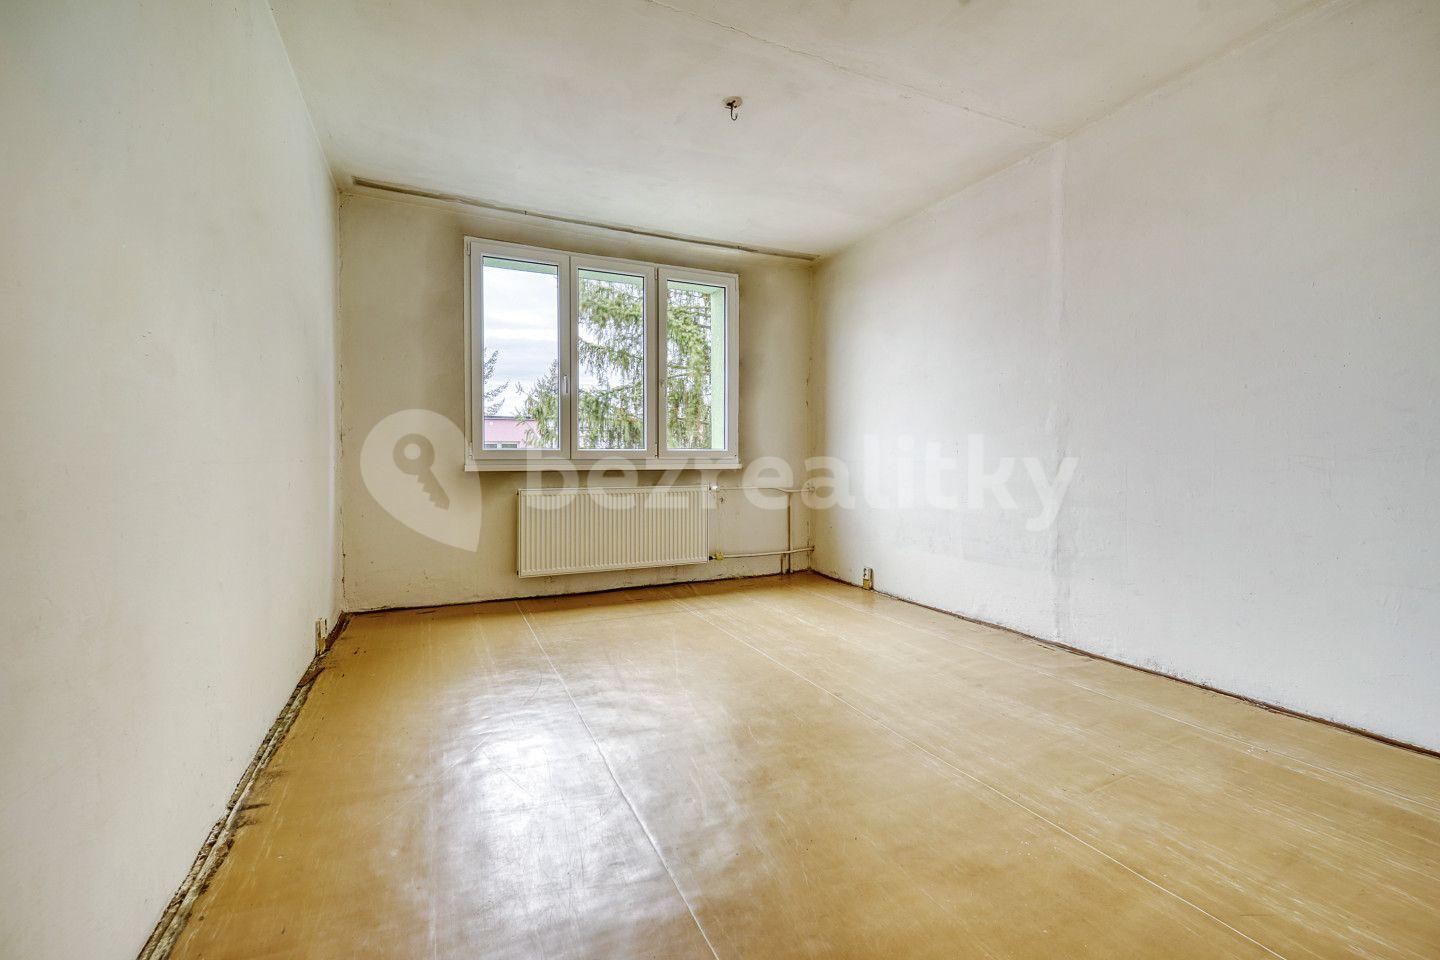 3 bedroom flat for sale, 76 m², Liliová, Kralovice, Plzeňský Region